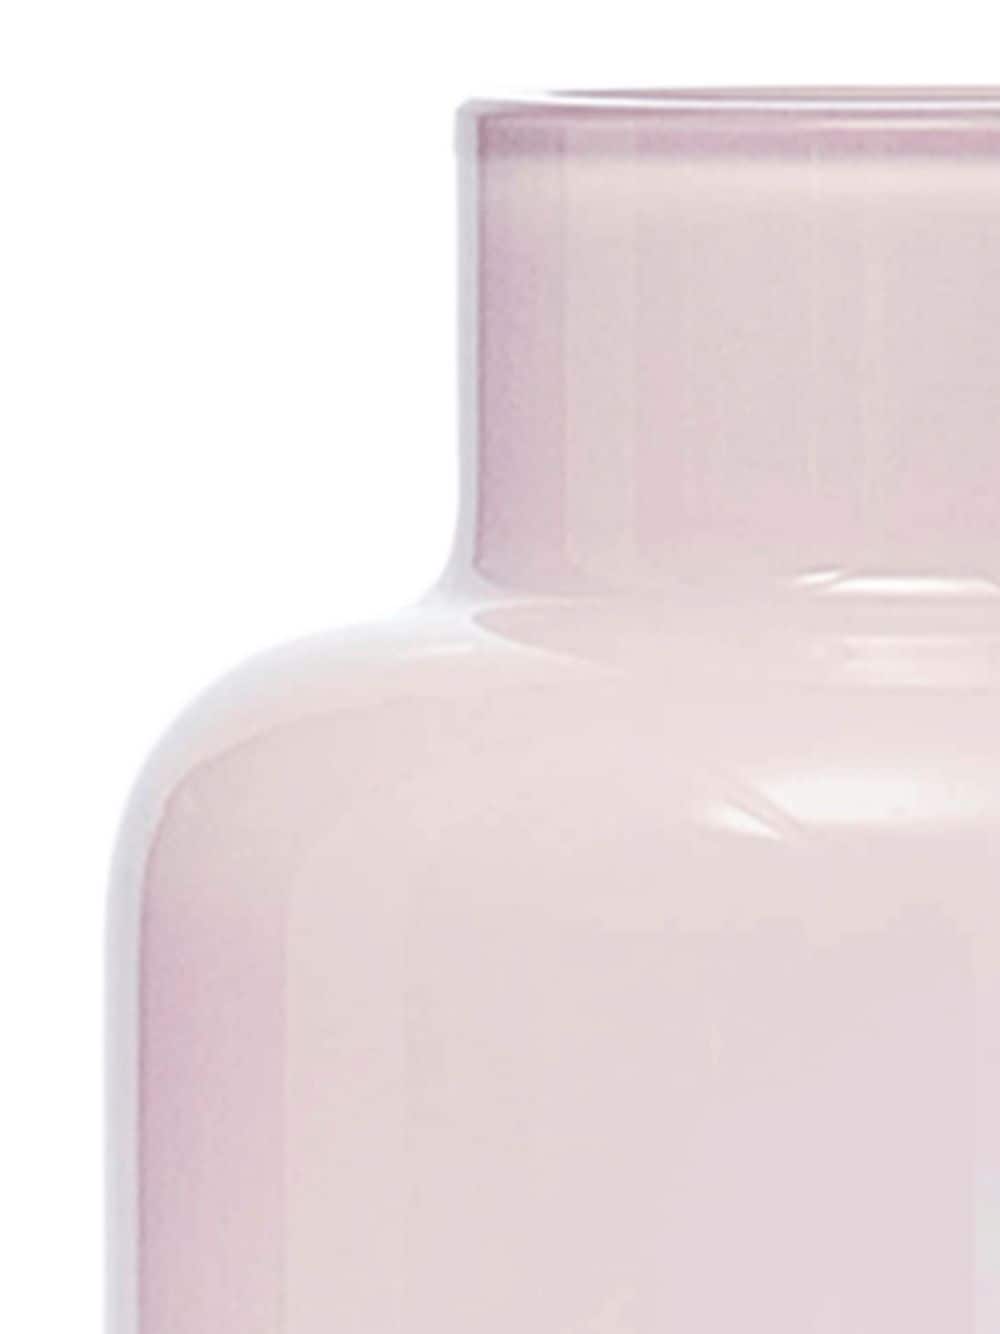 Nude Vaas - Opal pink top, clear bottom